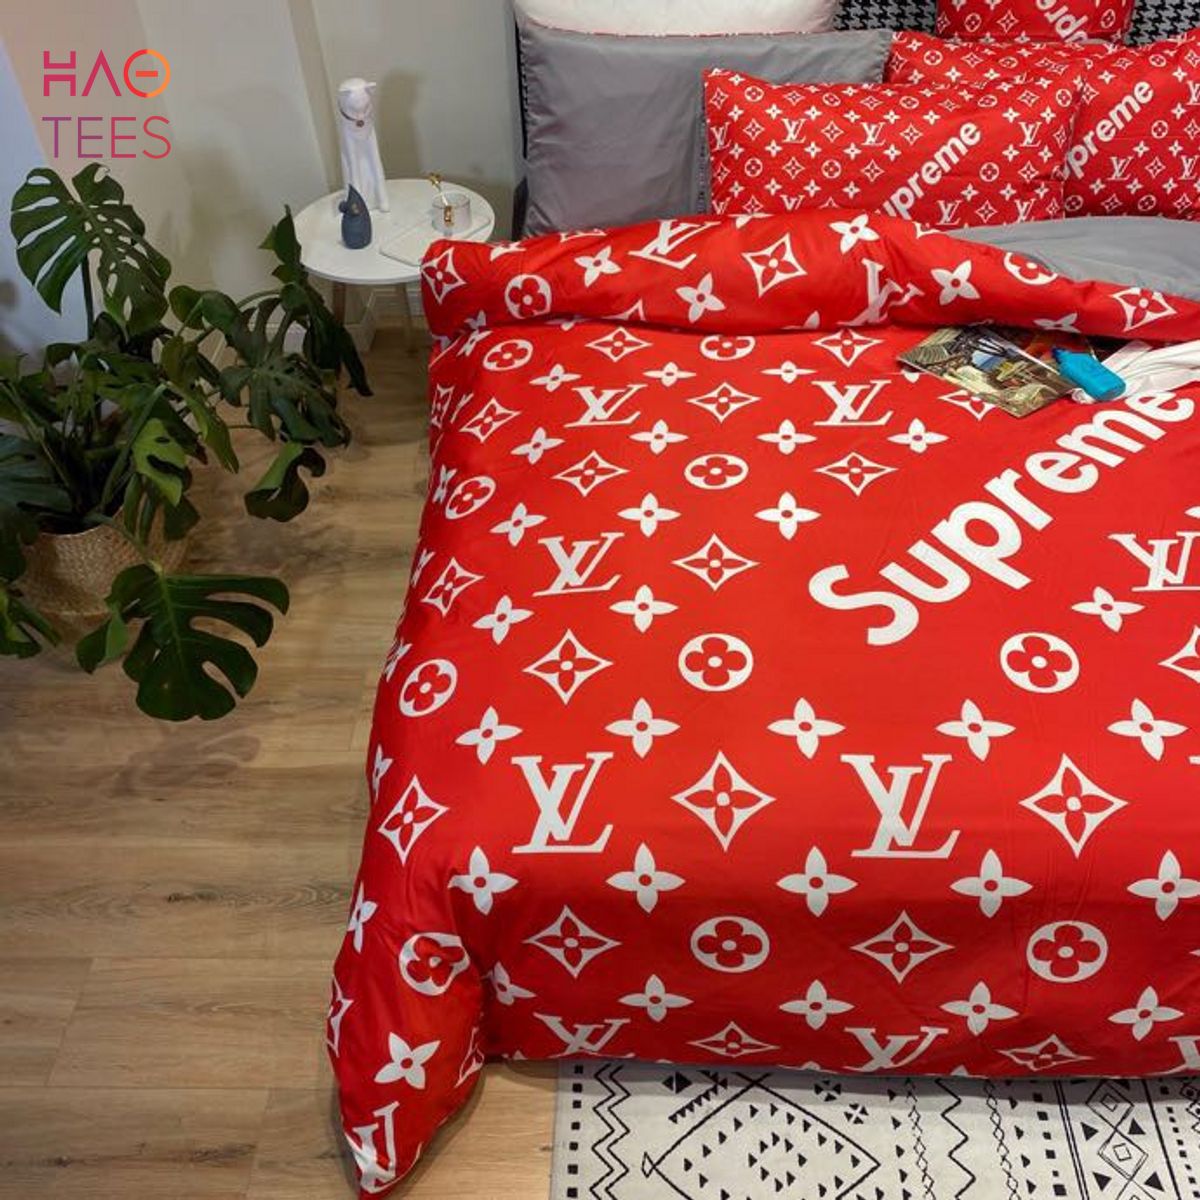 HOT Supreme Louis Vuitton red bedding set 100% New